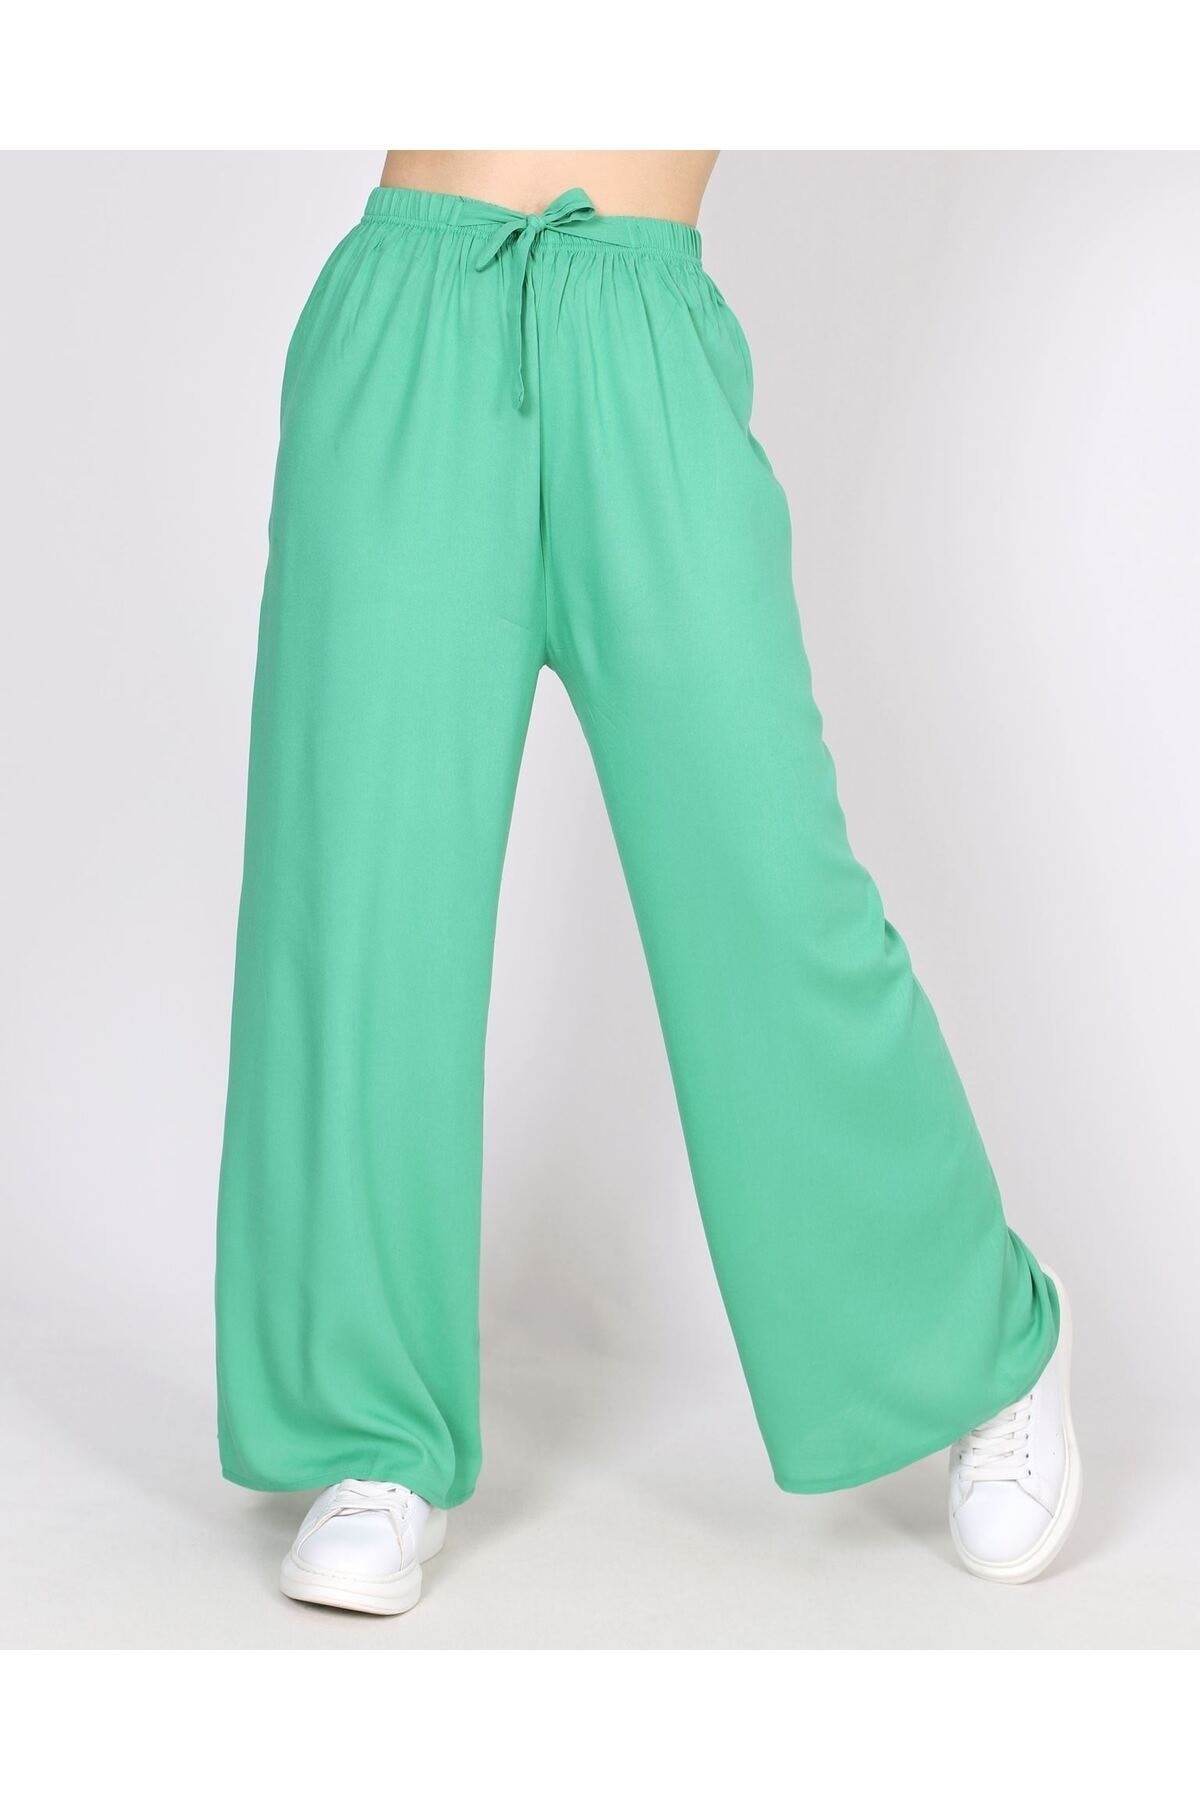 Beli Lastikli Ekstra Rahat Açık Yeşil Dokuma Pantolon - Yeşil